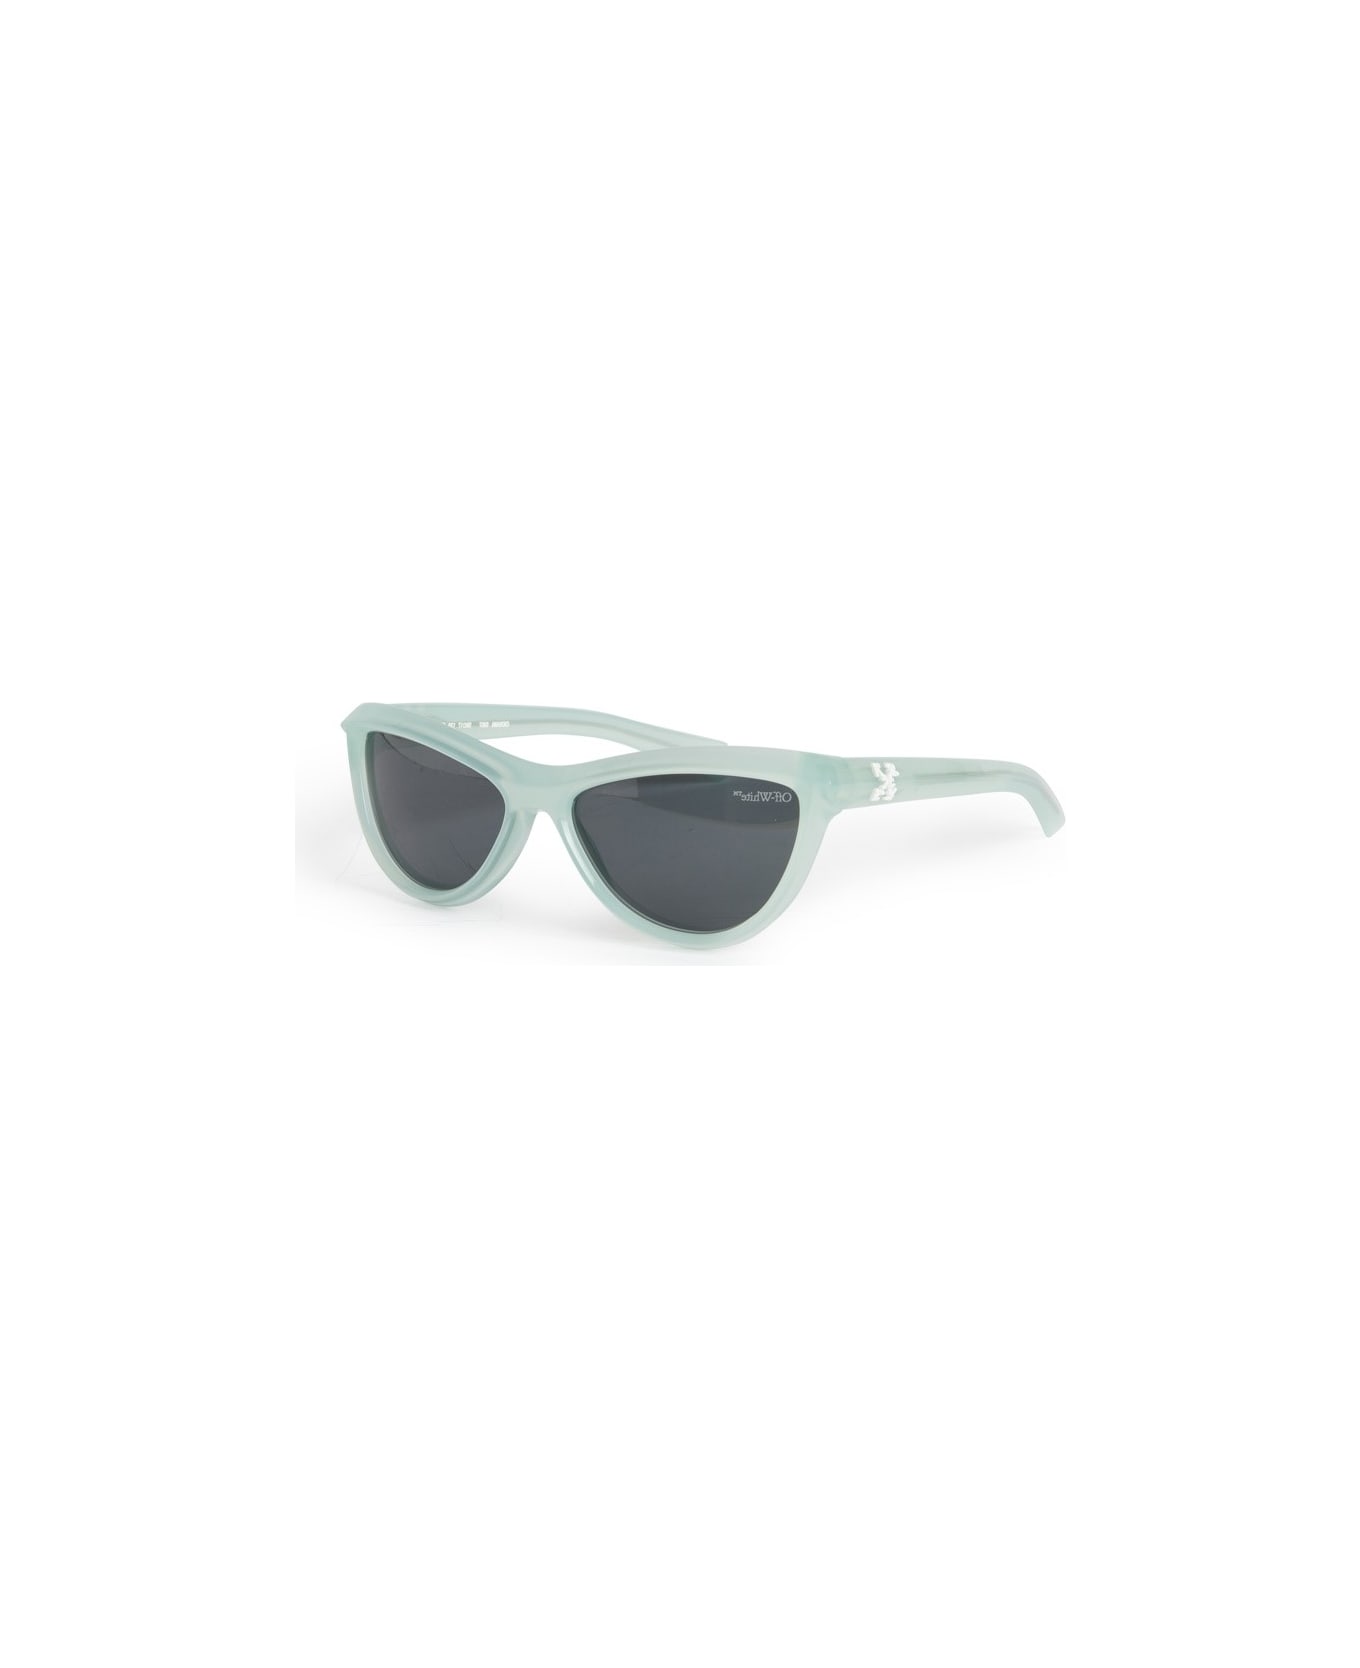 Off-White ATLANTA SUNGLASSES Sunglasses - Teal サングラス